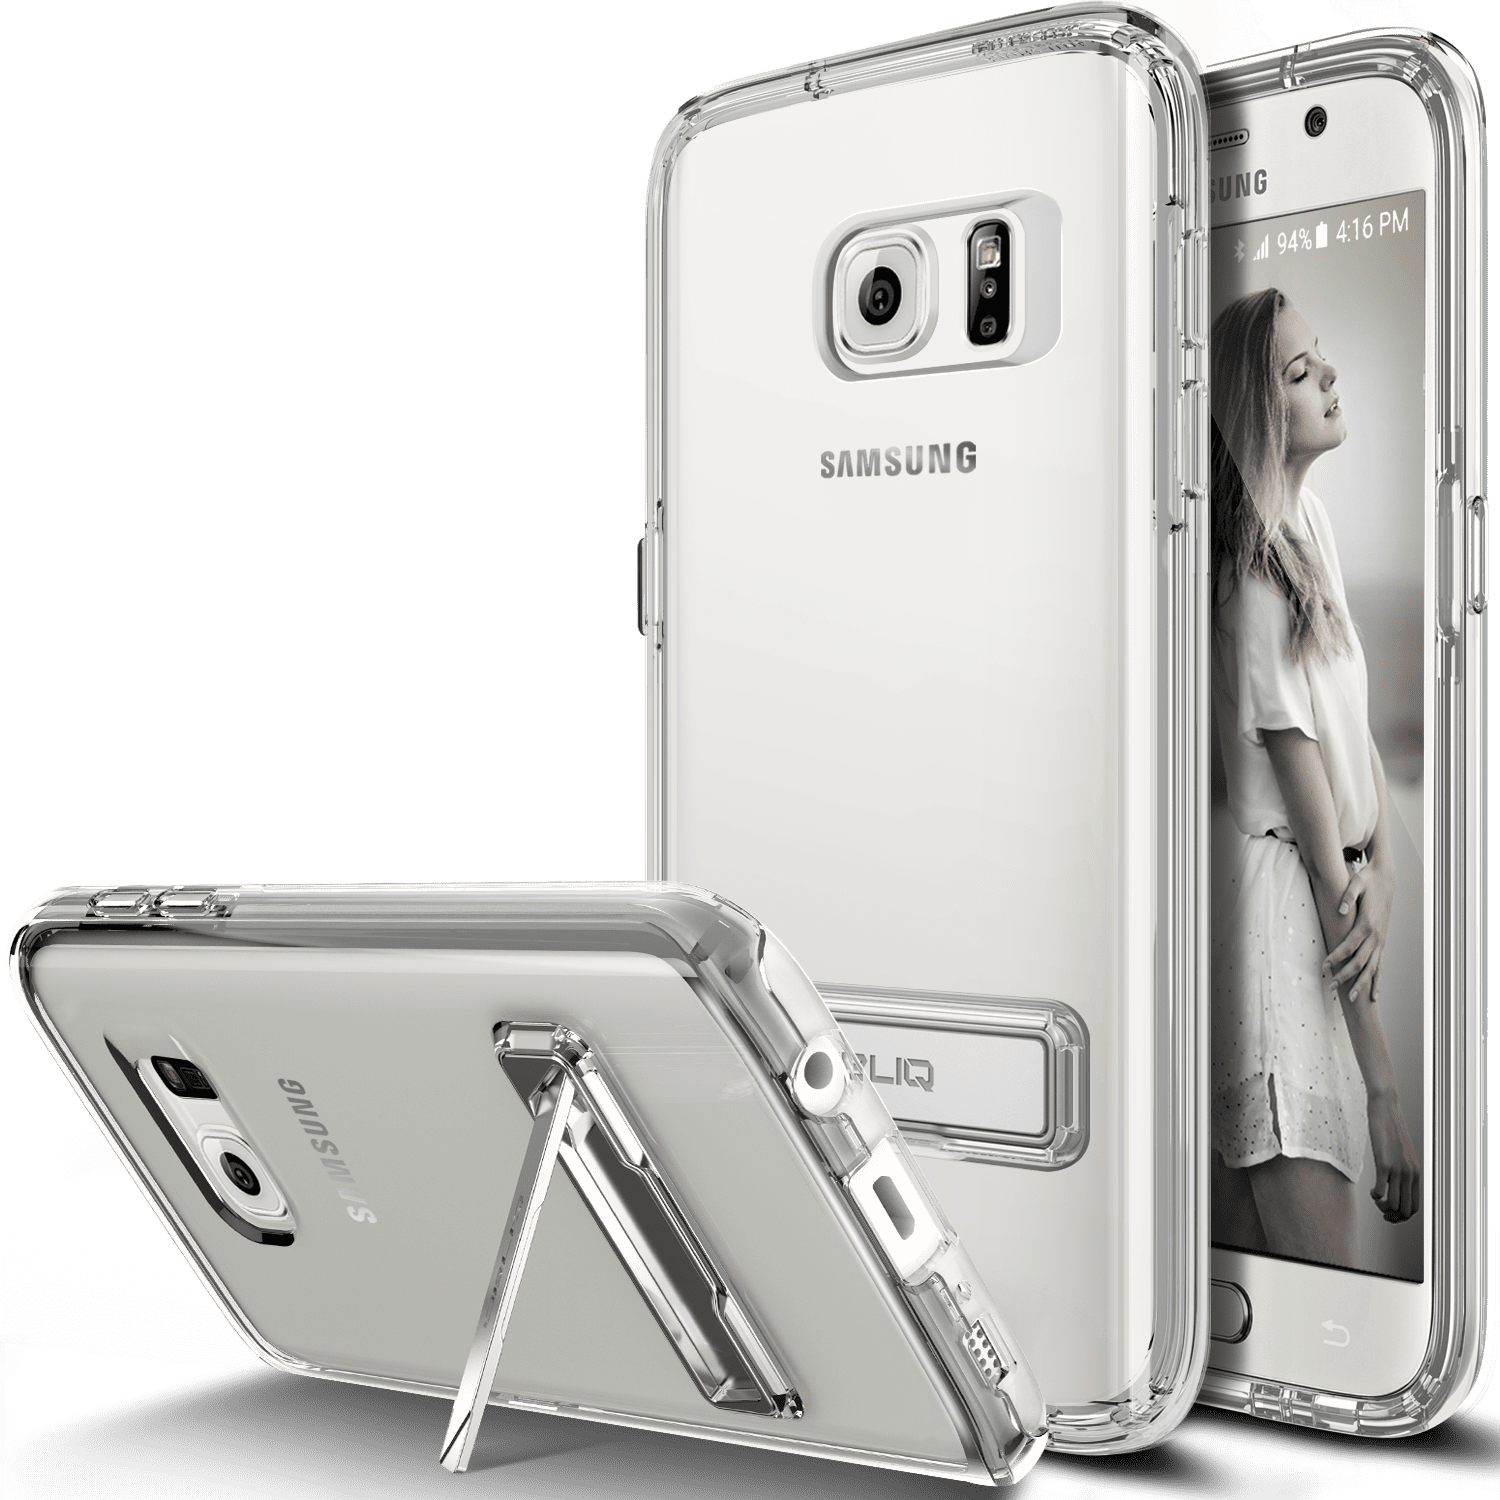 Obliq Galaxy S7 Case Naked Shield Clear Metal Kickstand Slim Crystal Clear Back Anti Scratch Protective Cover For Samsung Galaxy S7 Walmart Com Walmart Com